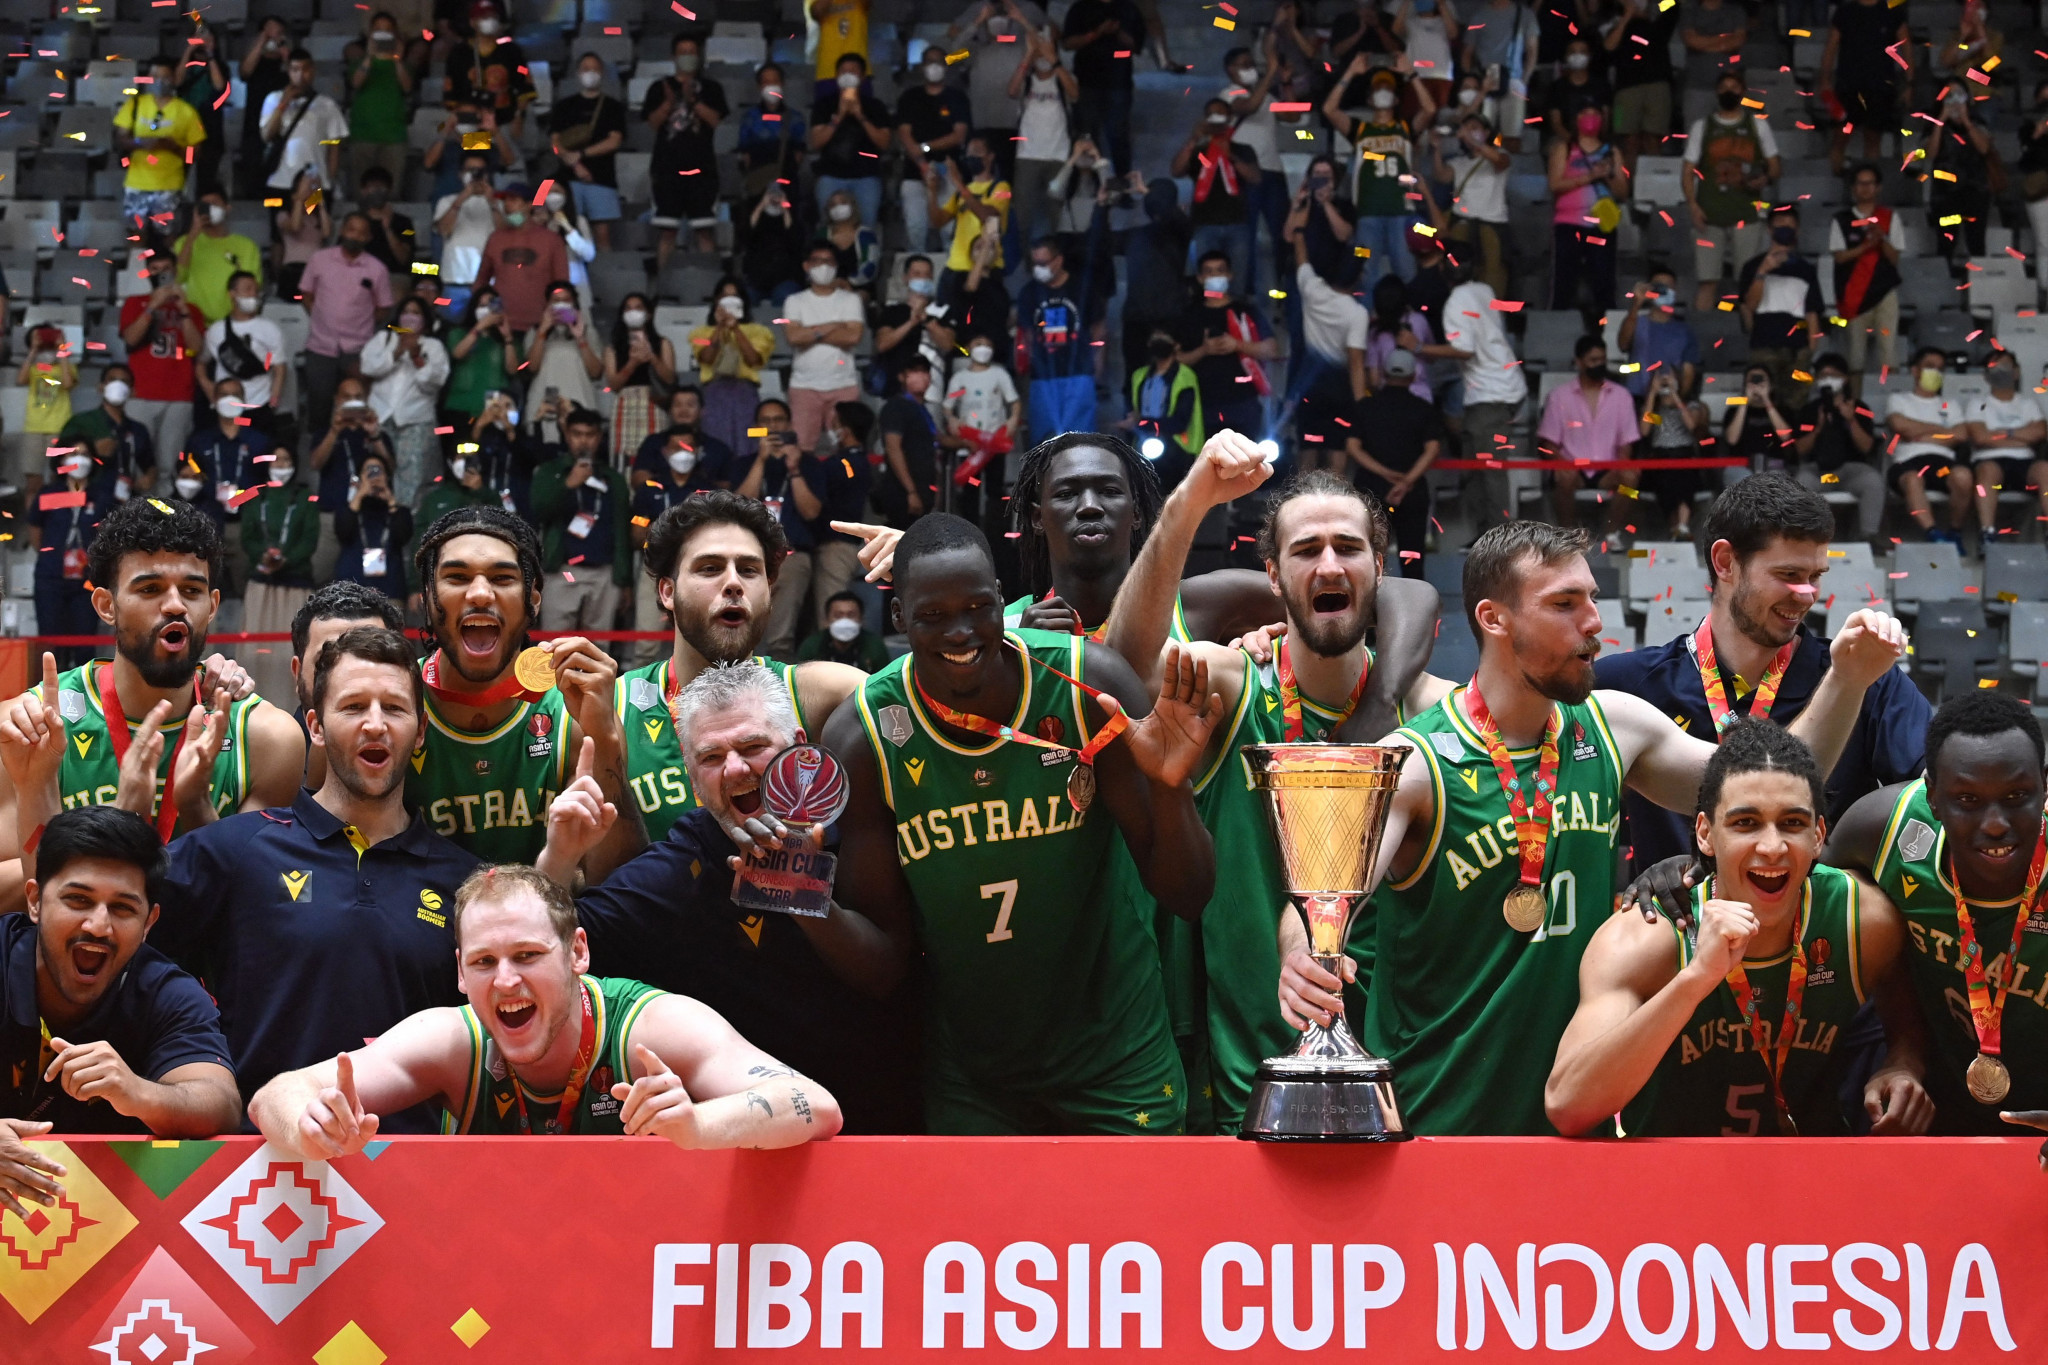 Australia eke out FIBA Asia Cup title with narrow victory over Lebanon